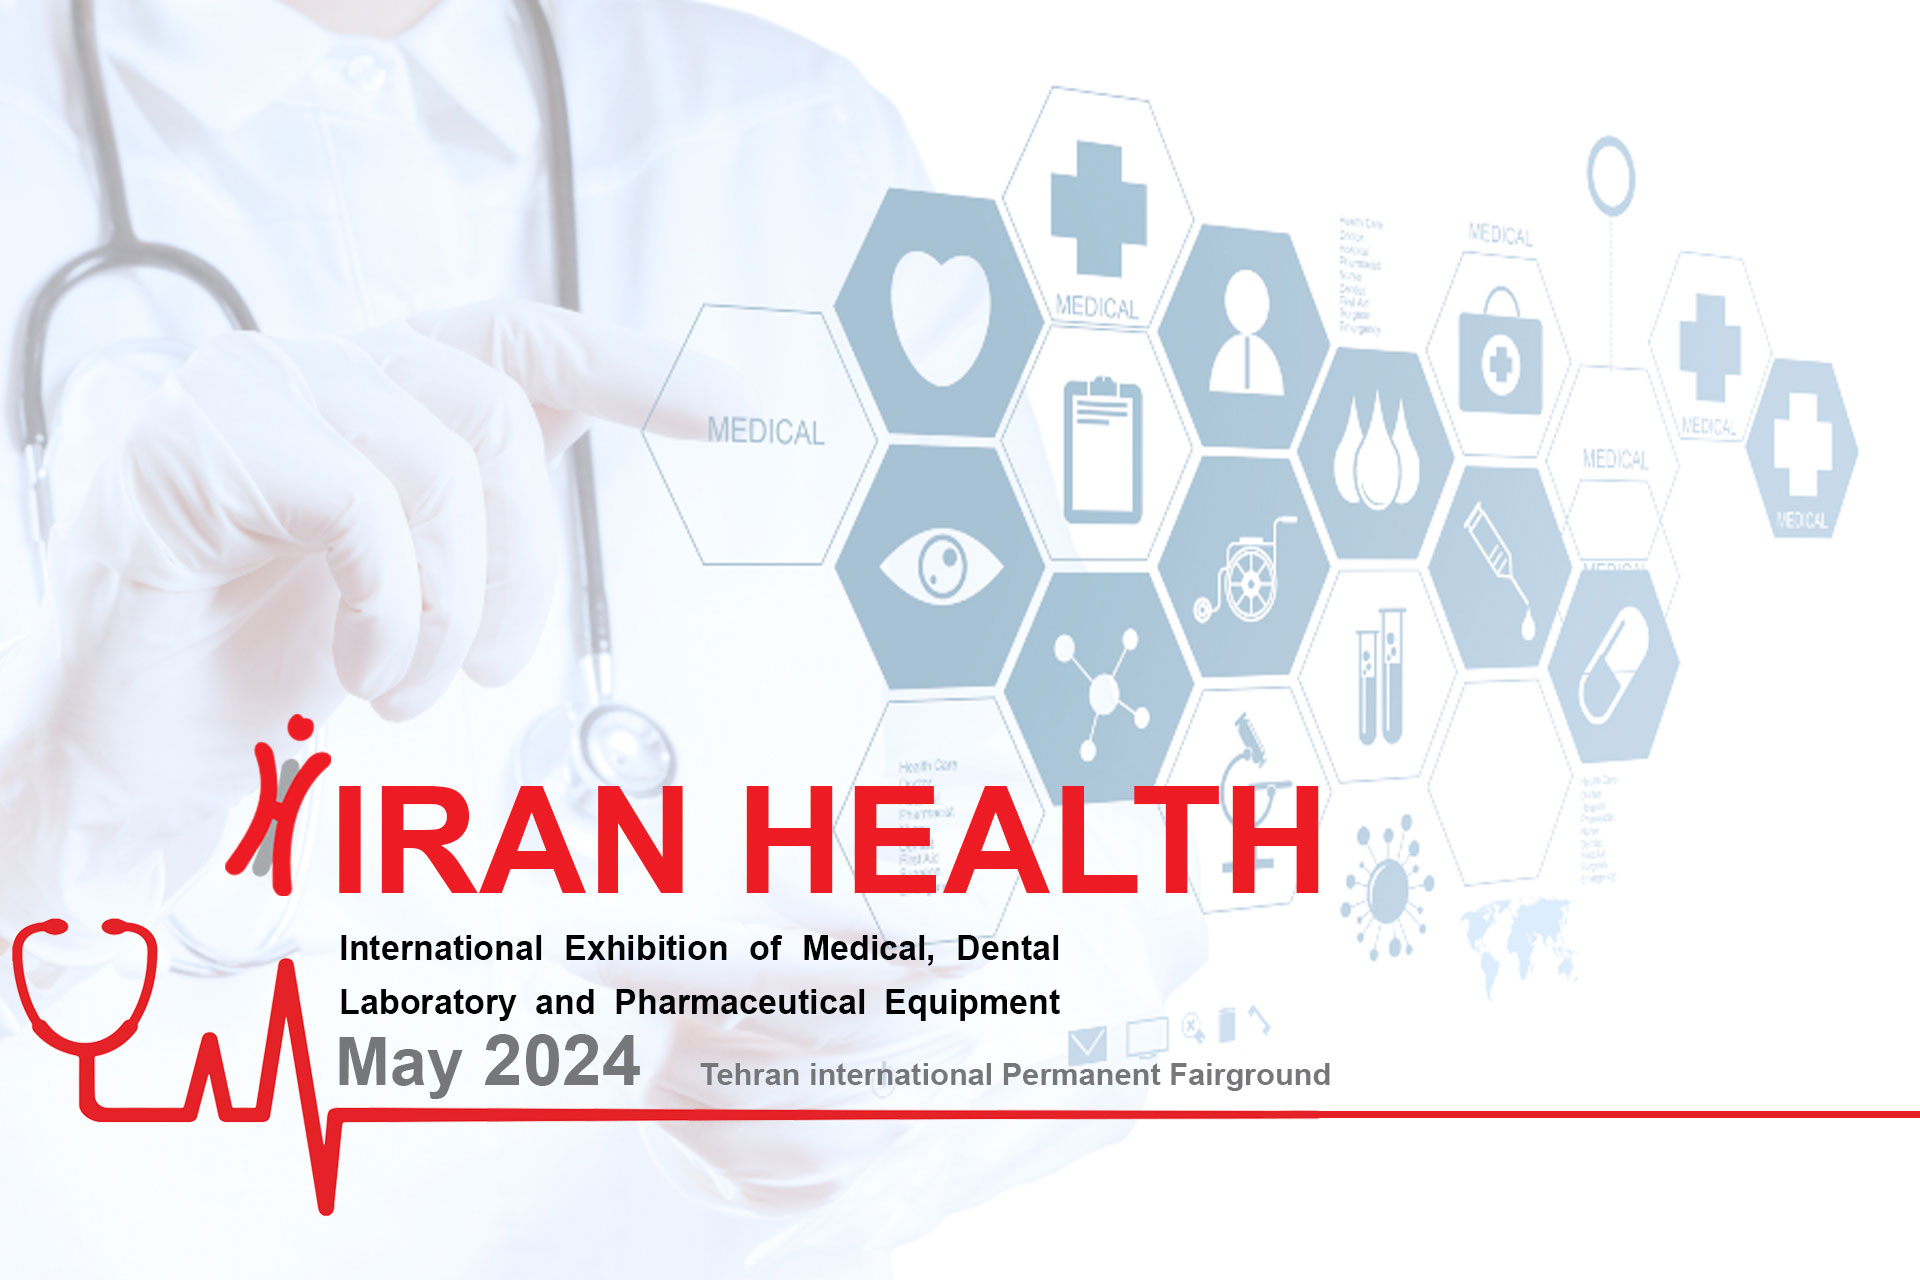 Iran Health 2024 pic 06 - The 25th International Health Exhibition 2024 in Iran/Tehran